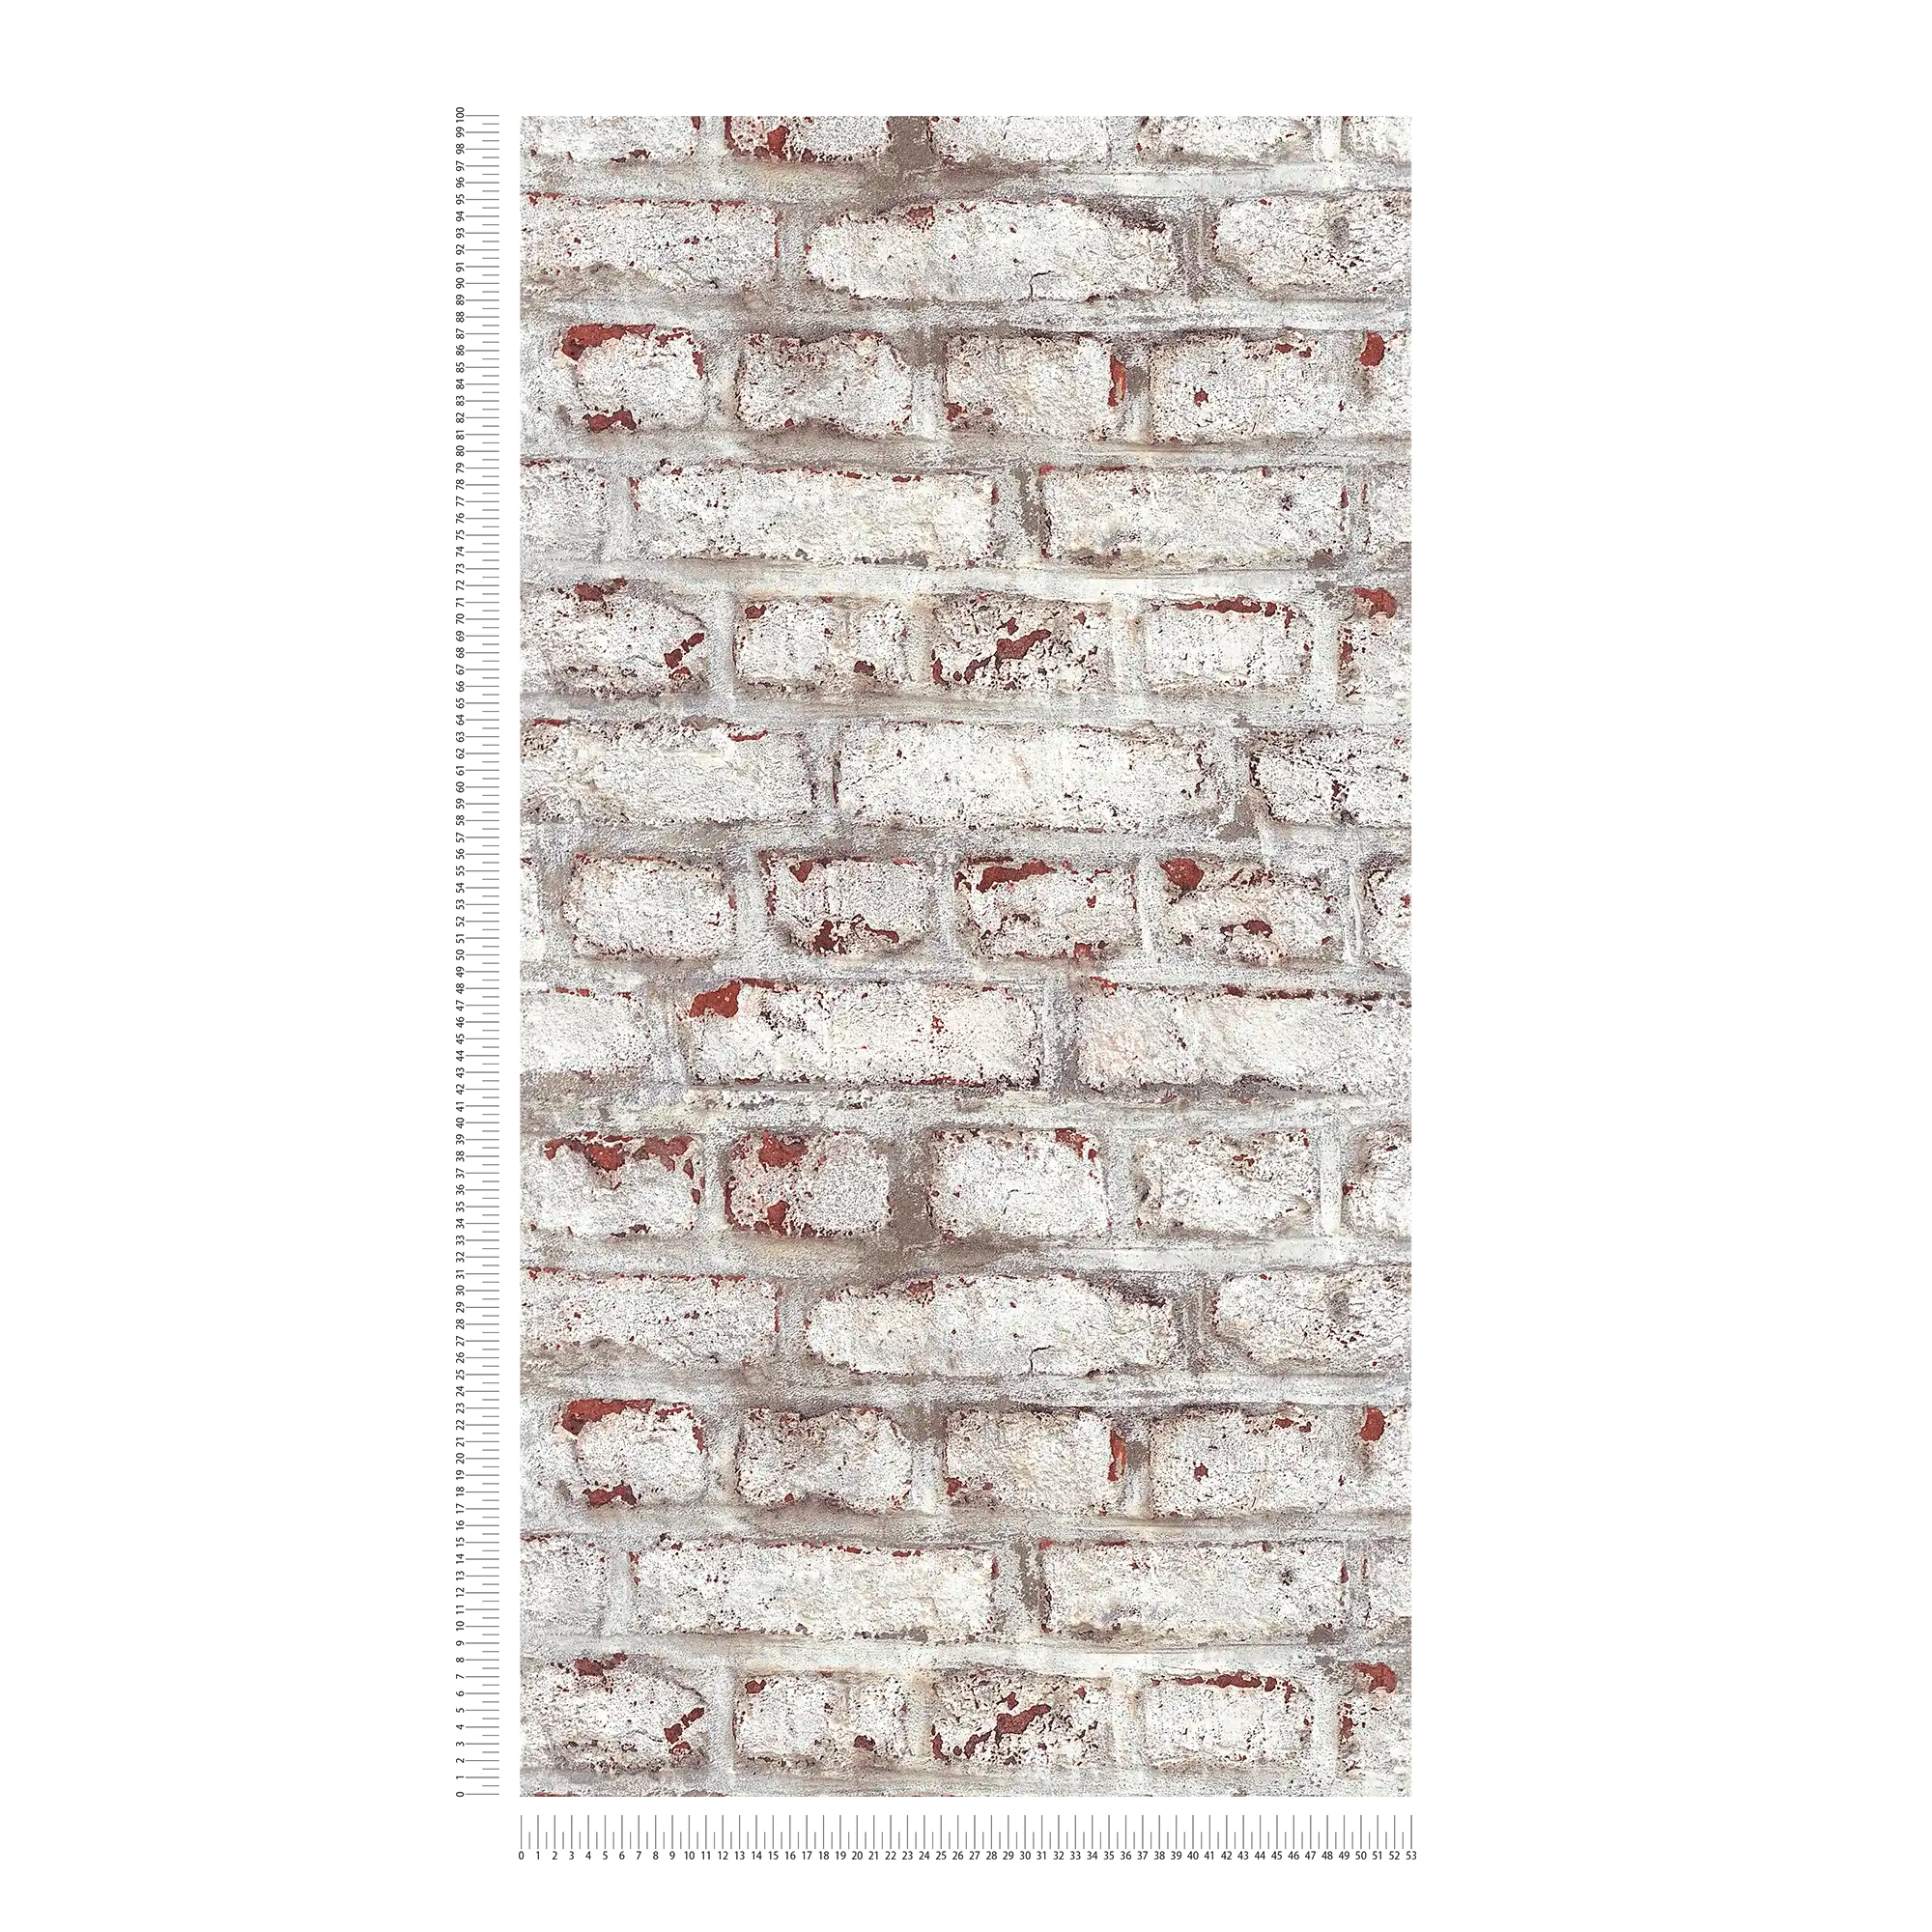             Masonry wallpaper with rustic brick wall whitewashed - white, brown, grey
        